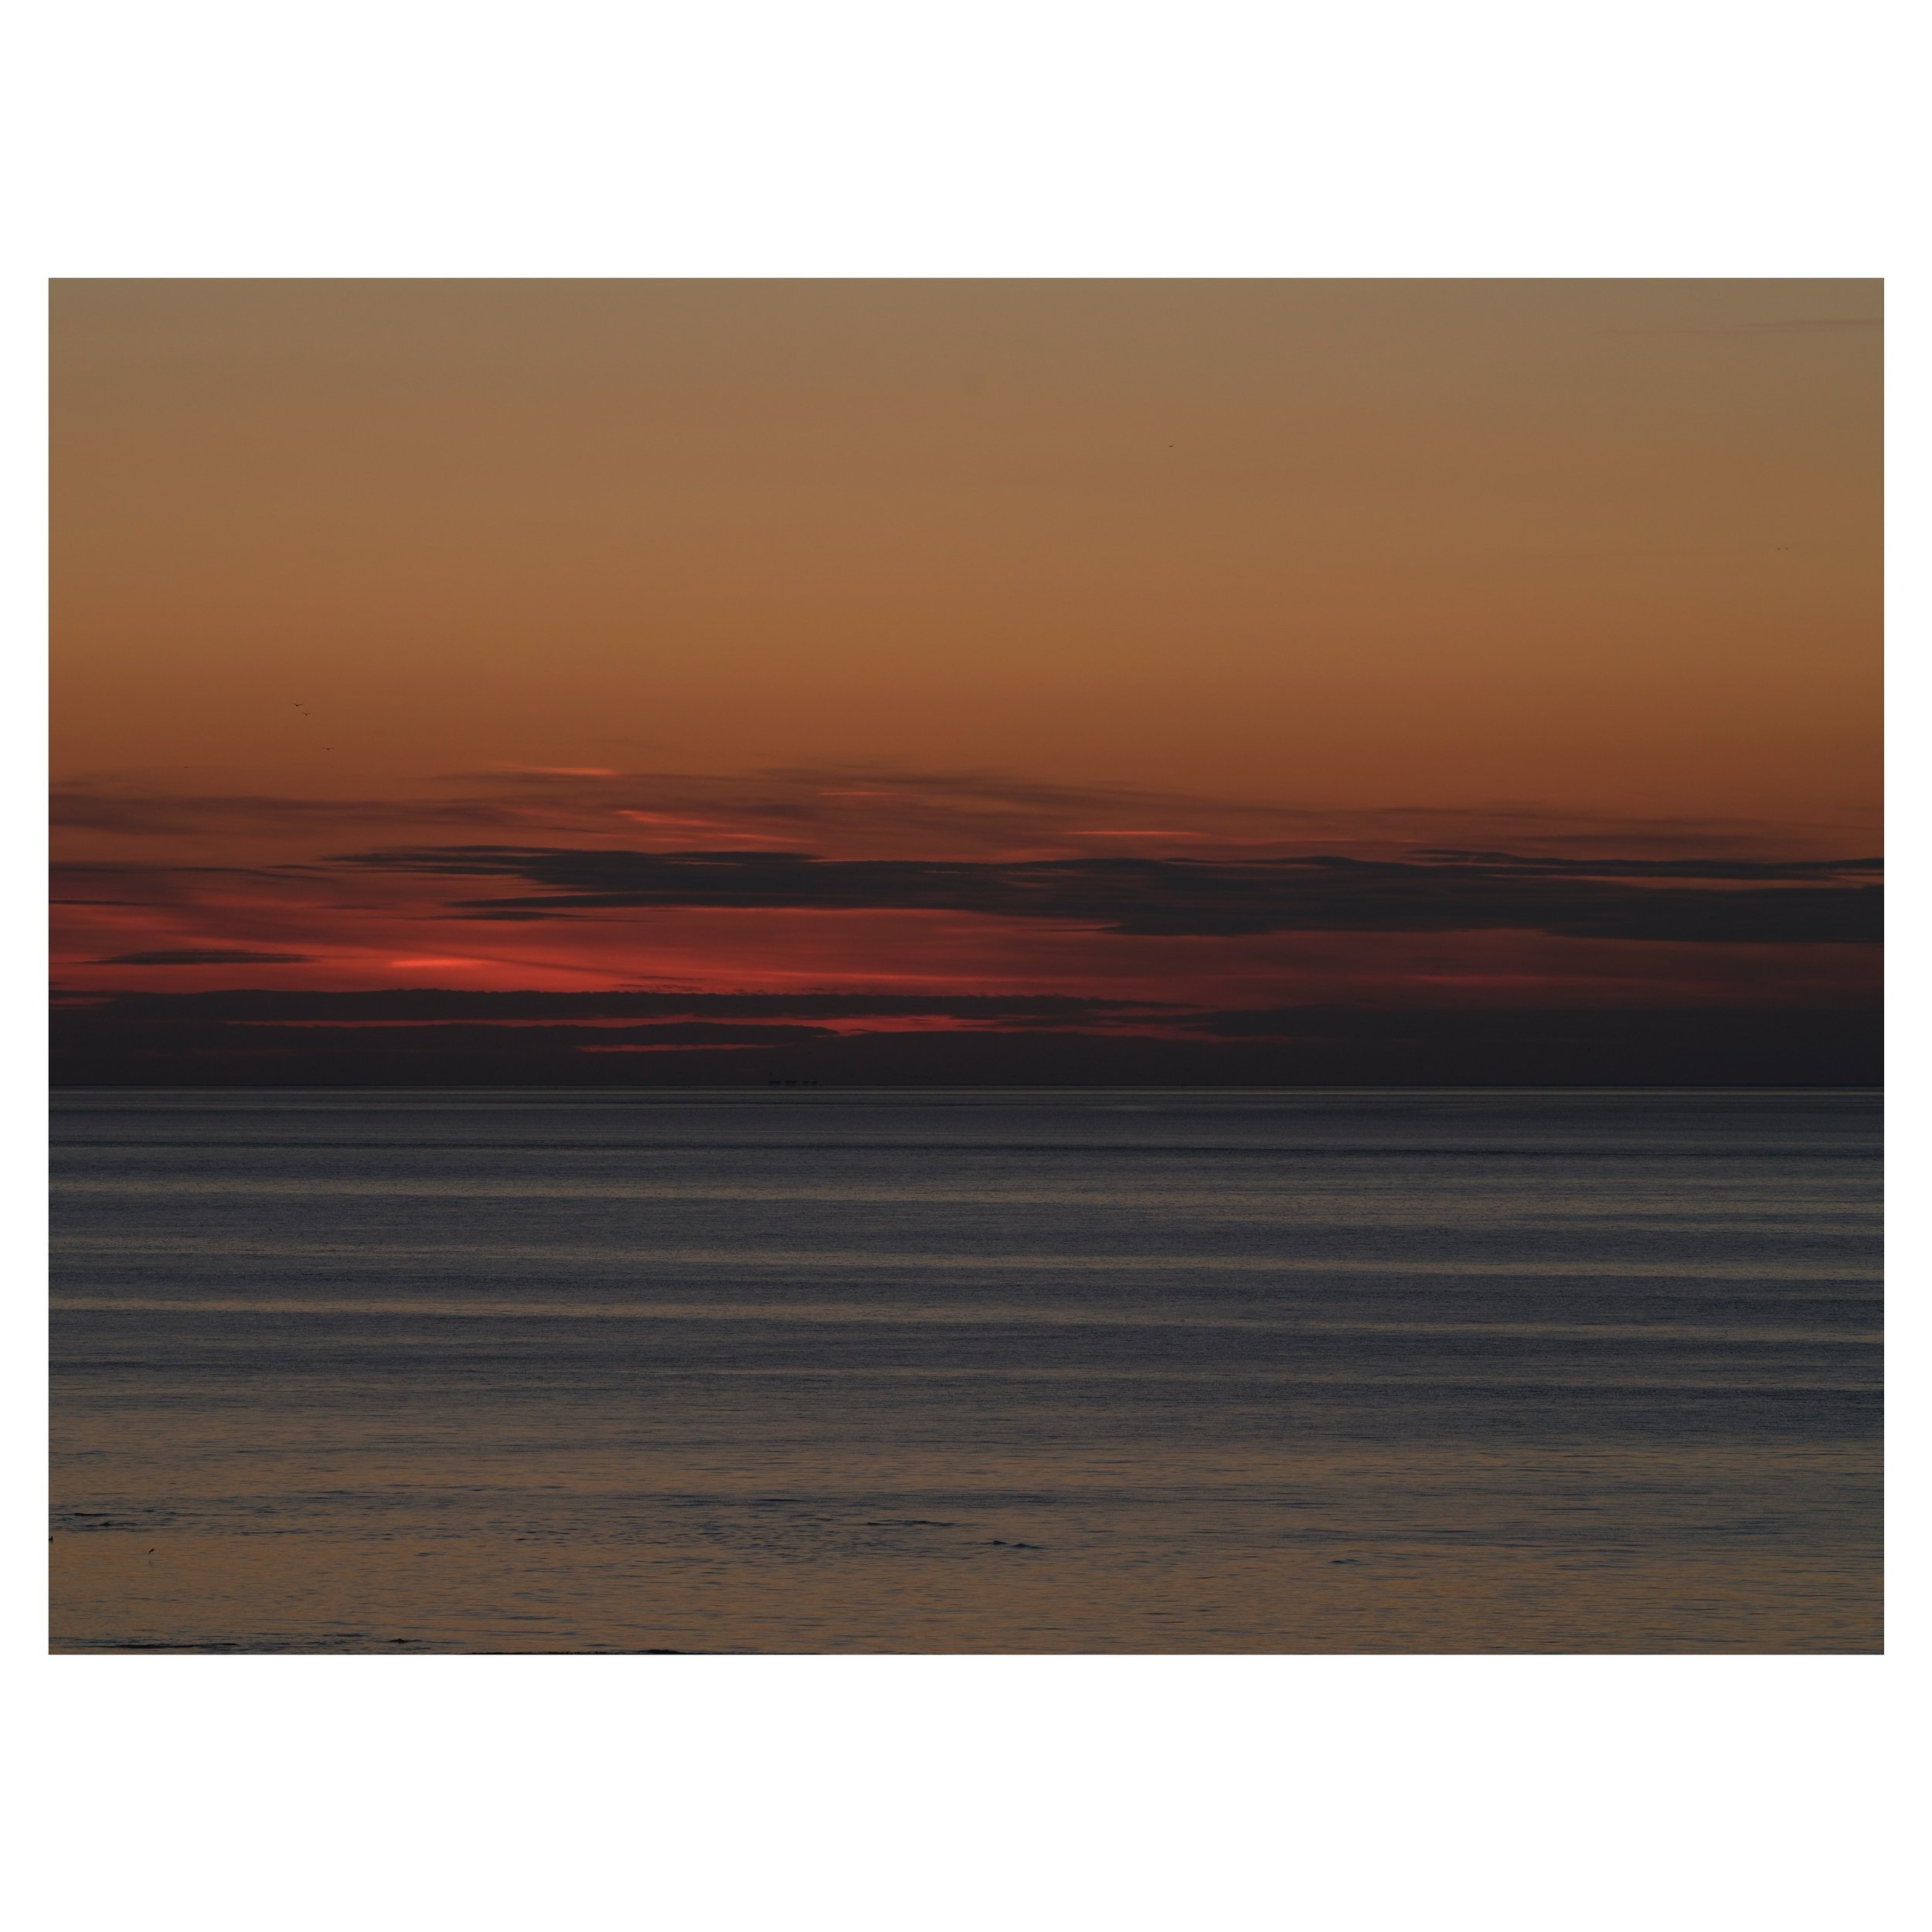 Tan lines.
.
.
.
.
.
#sun #sunset #sea #seascape #horizon #fujifilmgfx100s #gfx #instaphoto #photooftheday